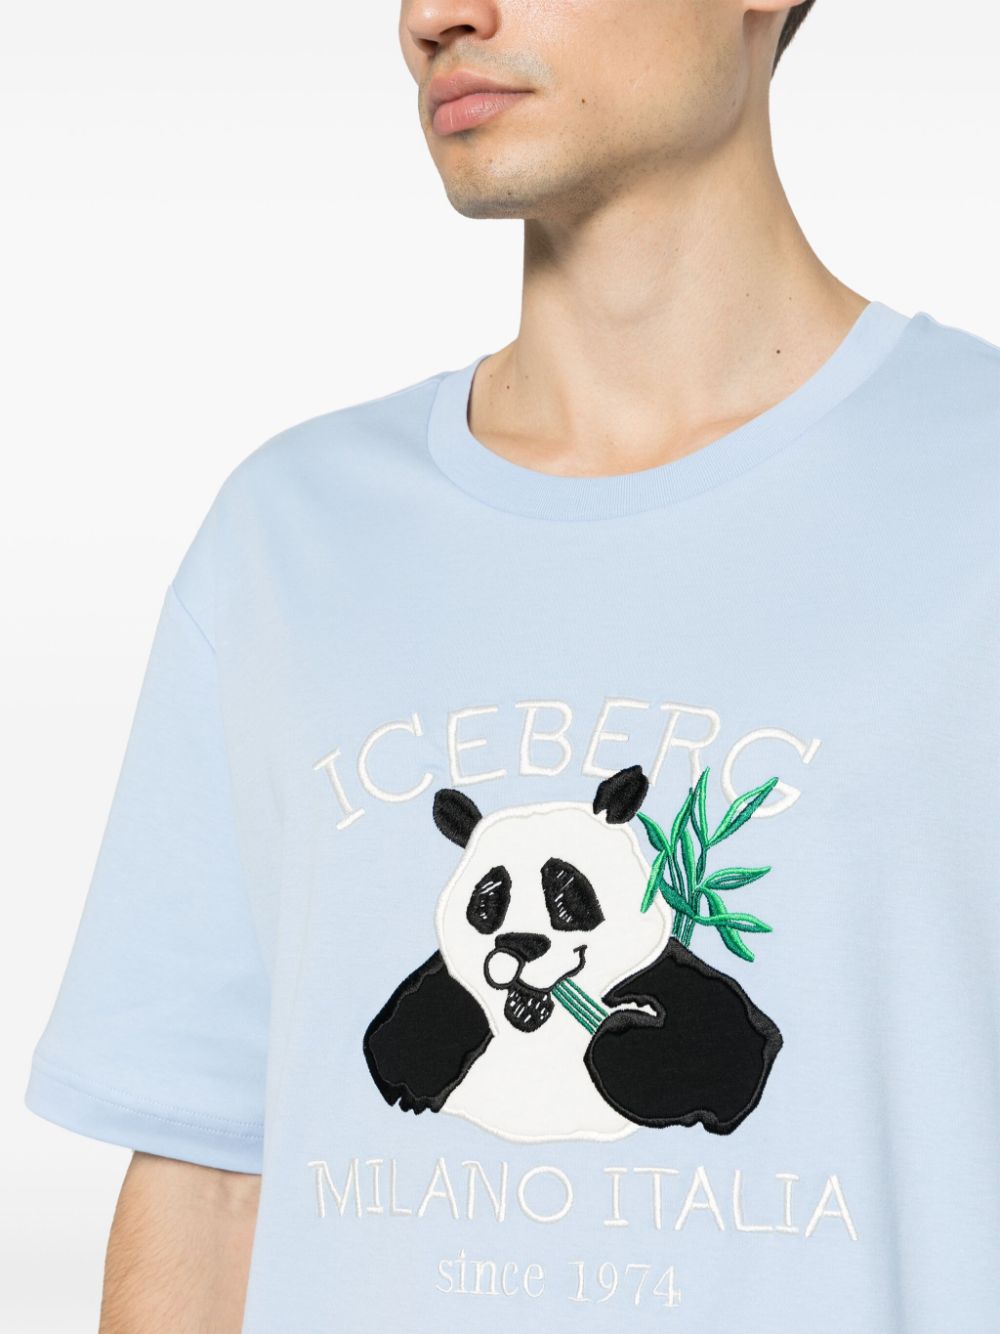 Iceberg T-shirt met geborduurd logo Blauw